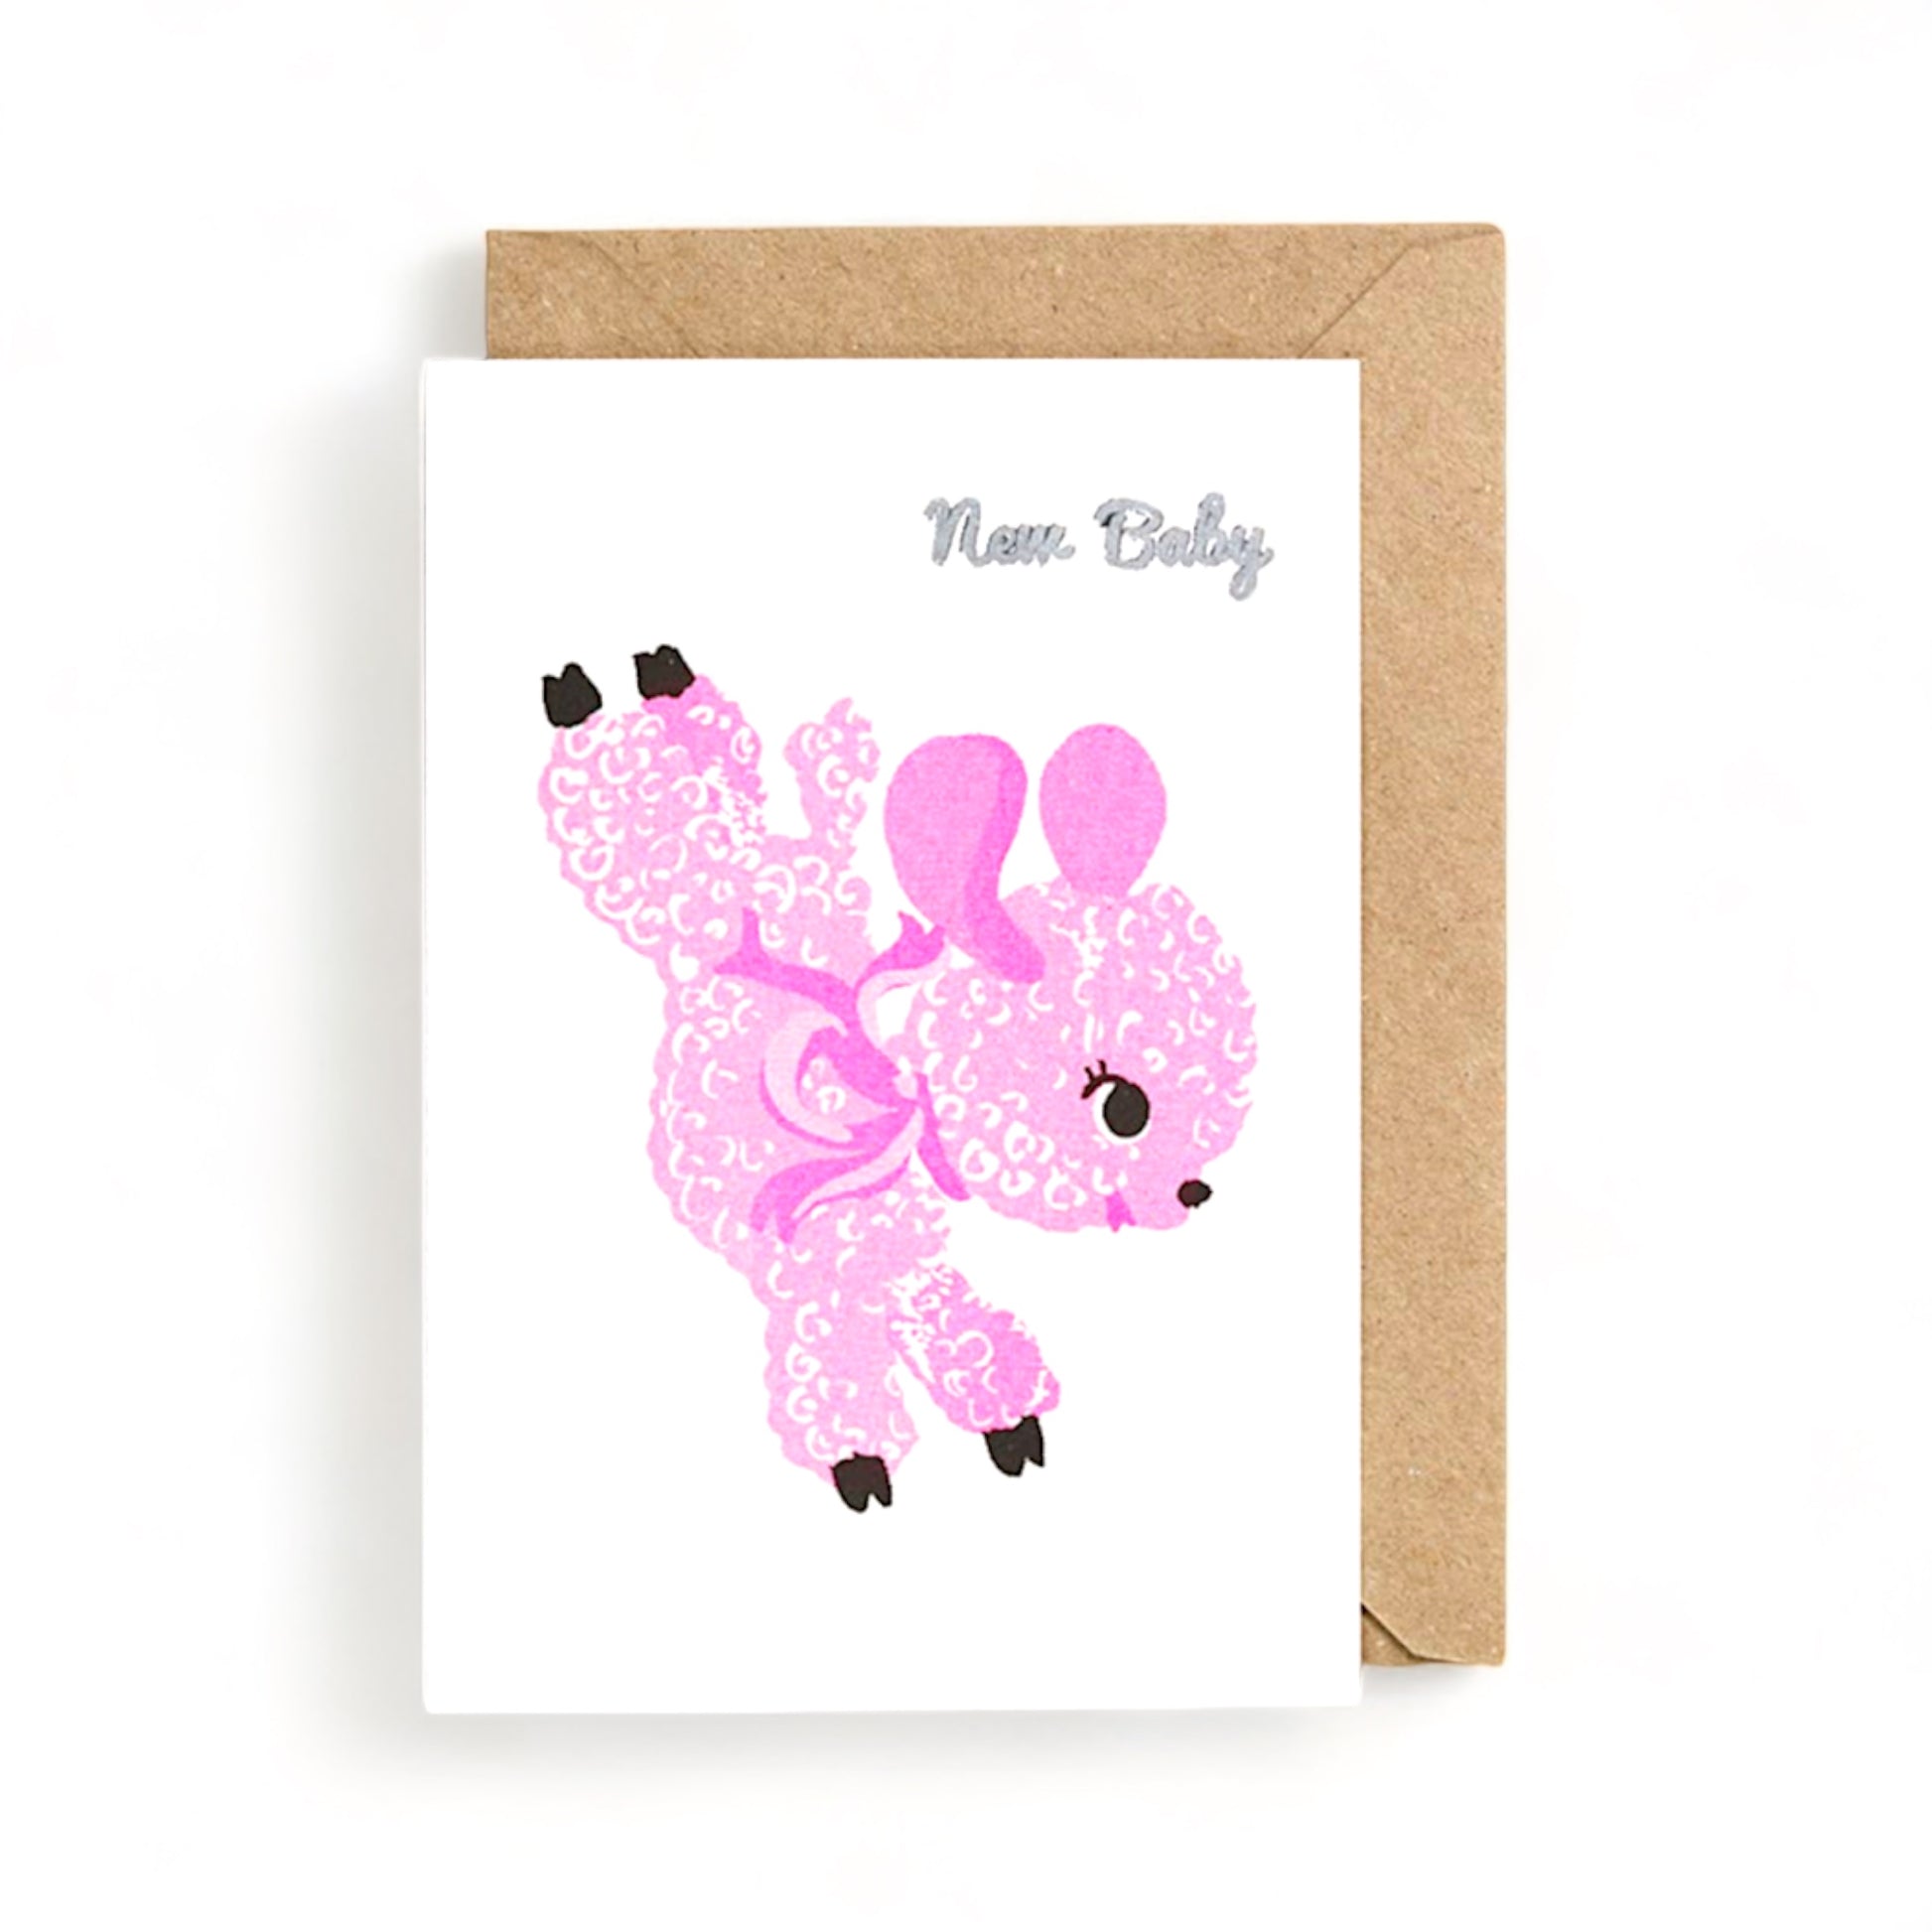 New Baby - Girl Greeting Card - Hella Kitsch